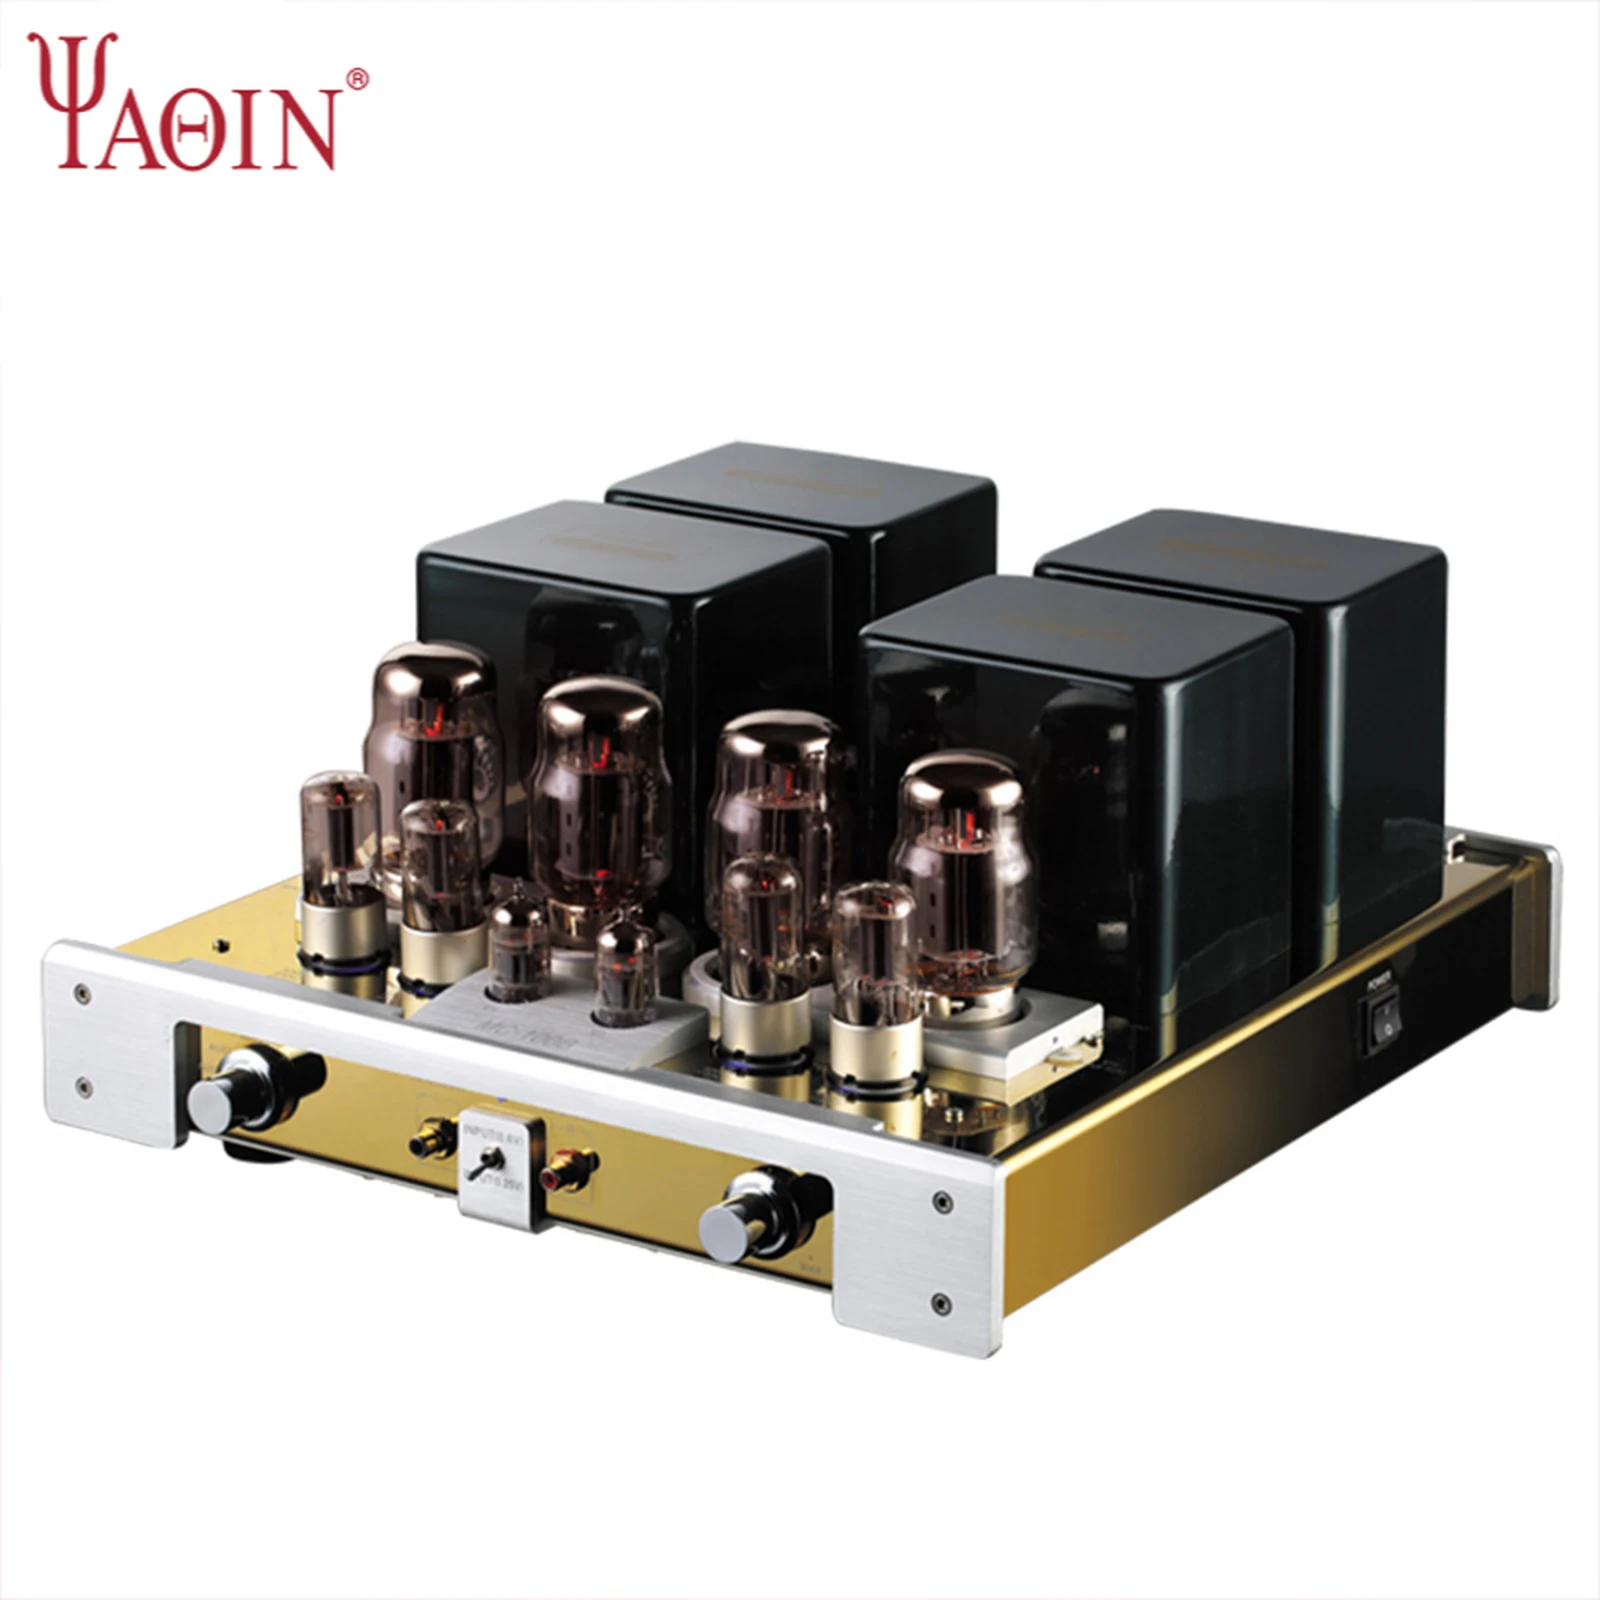 YAQIN MC-100B Gallbladder 50W*2 KT88 Vacuum Tube Amplifier Home Fever HiFi High Power Amplifier Sound Factory Direct Sales